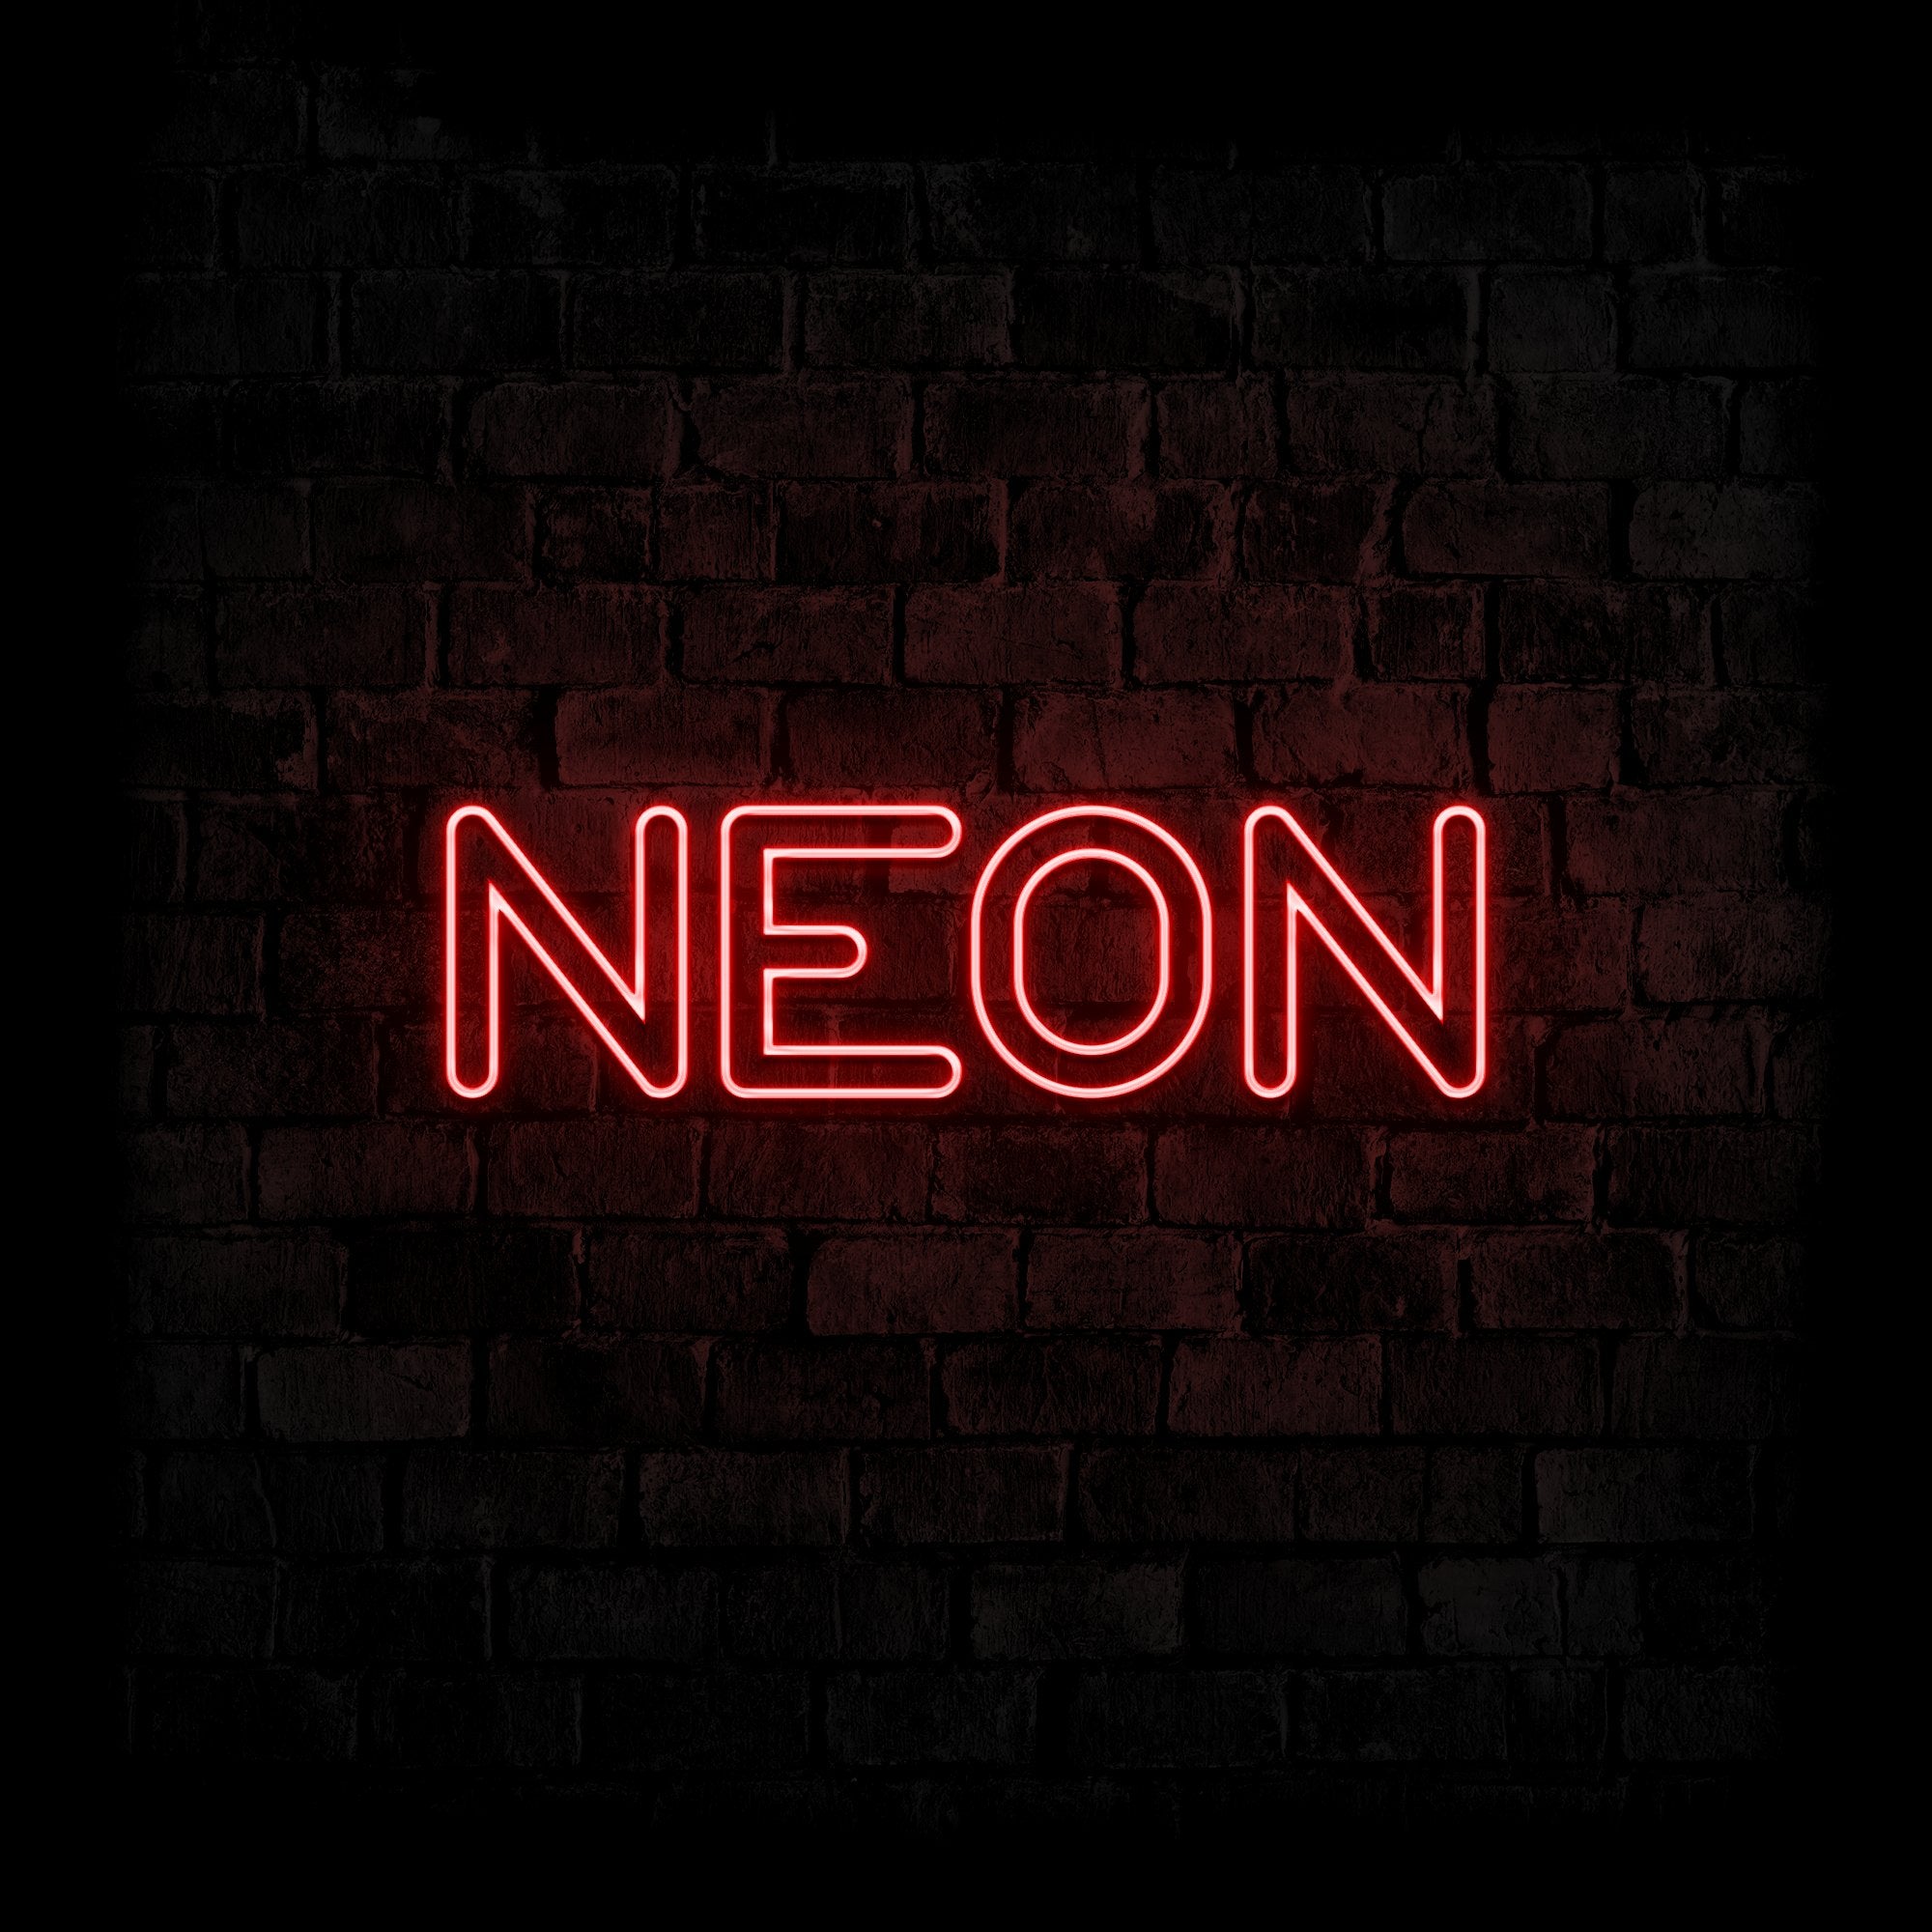 NEON - Neonschild - Official Neon - led neon schild schriftzug personalisiert